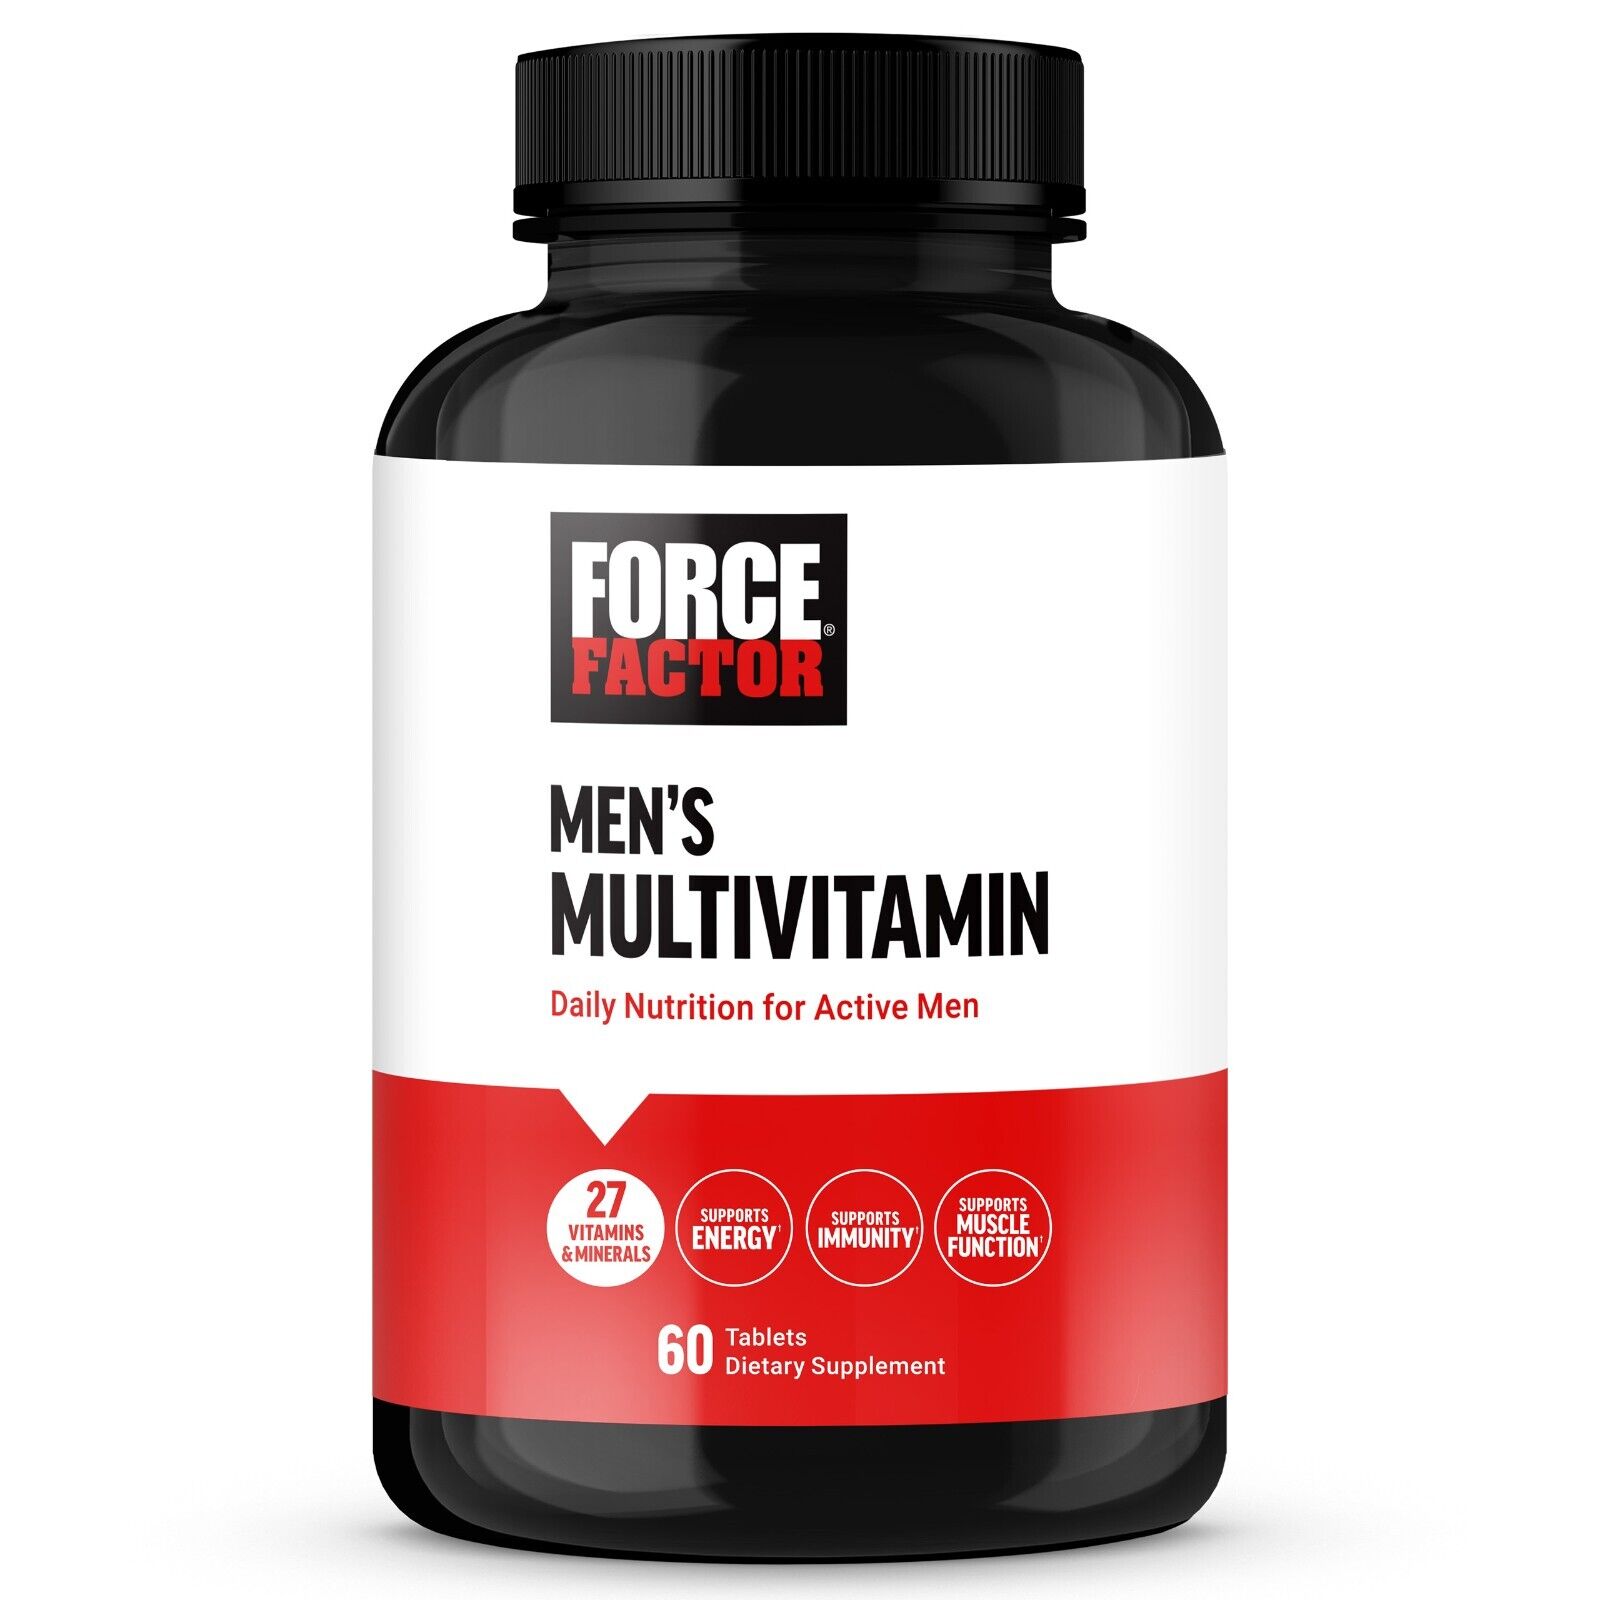 Force Factor Men’s Multivitamin Plus Amino Acids with 27 Vitamins & Minerals